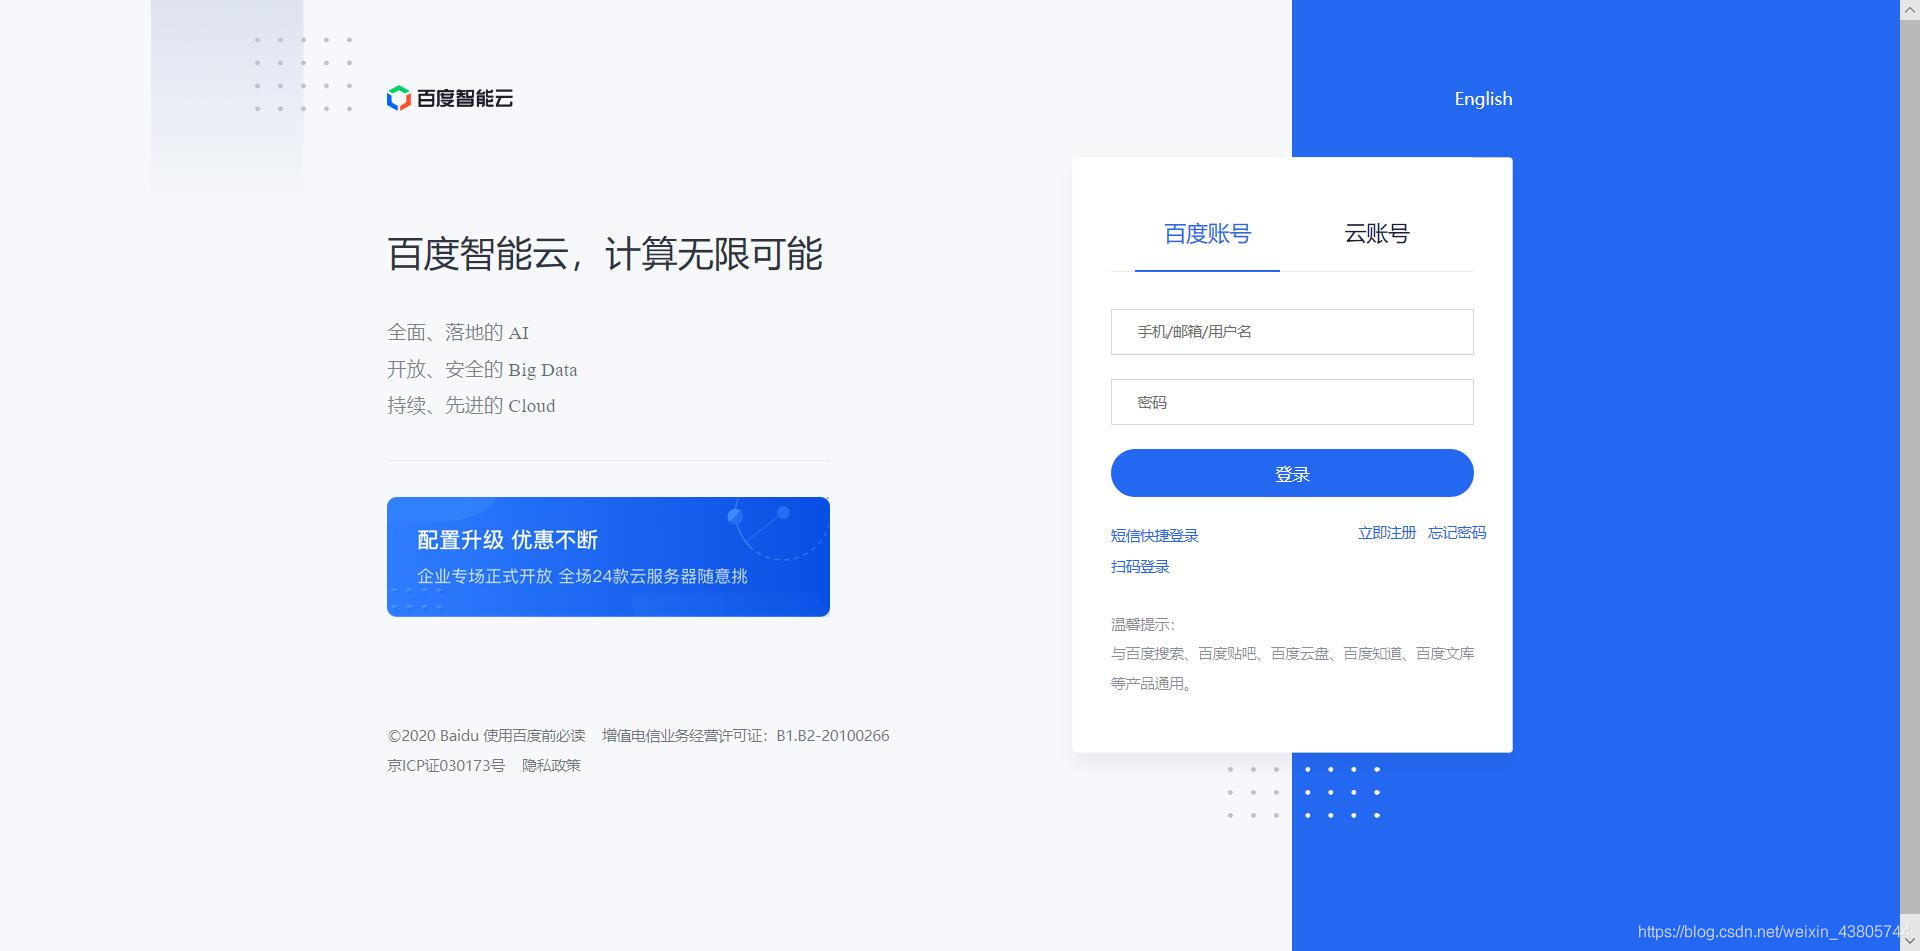 Baidu Smart Cloud landing page